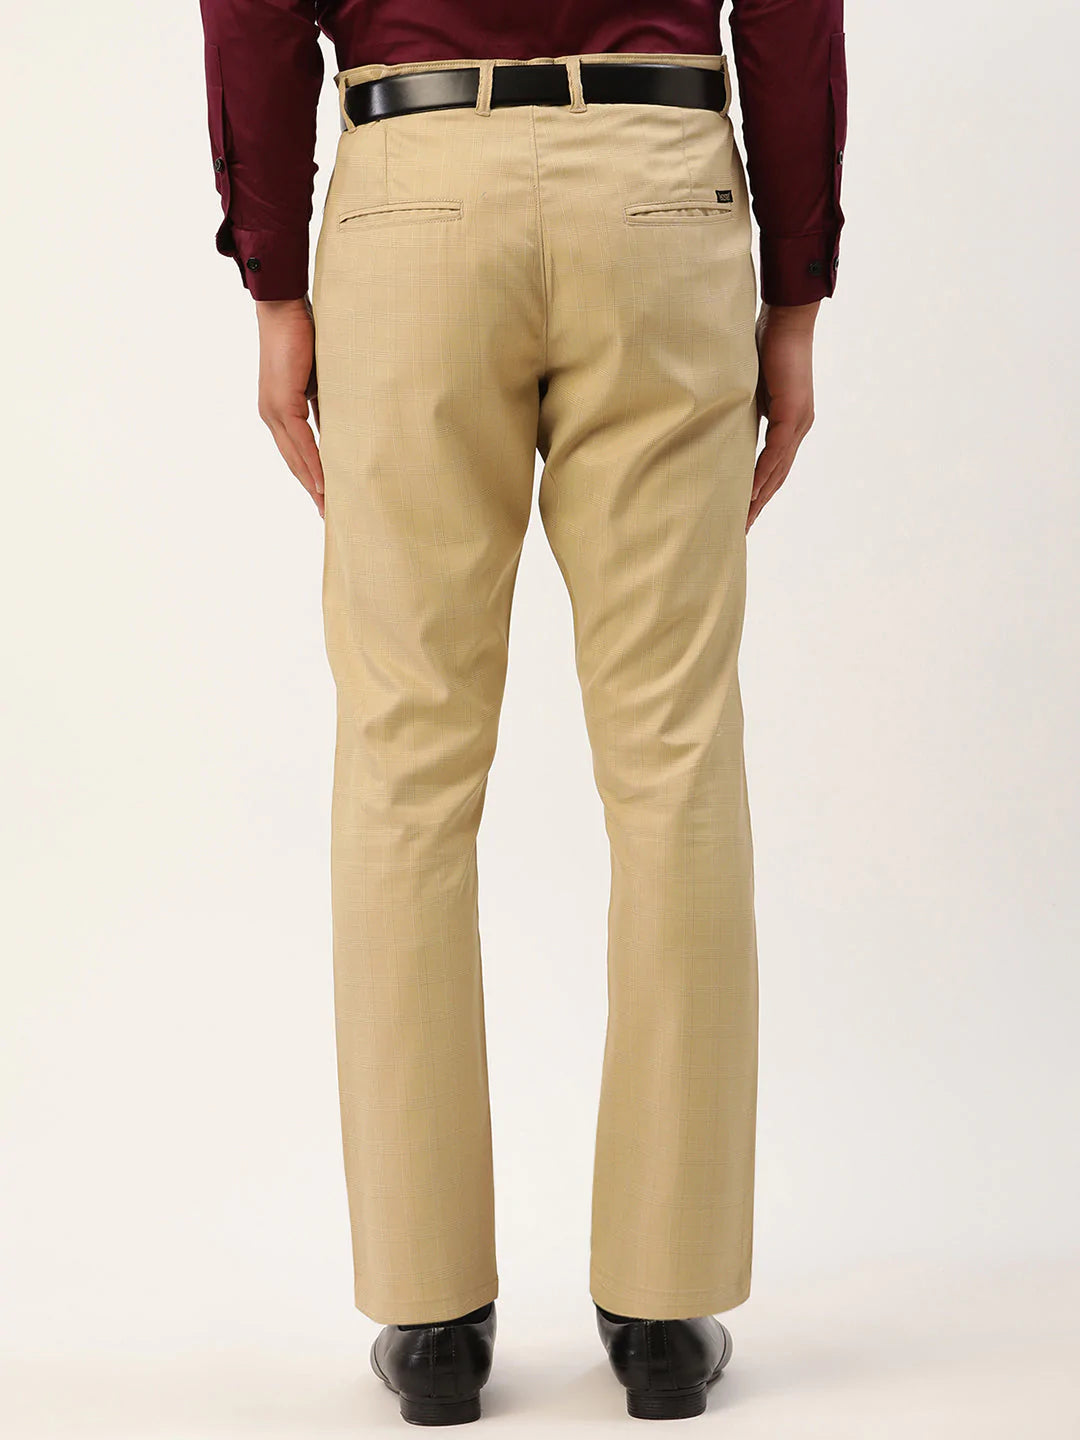 Jainish Men's Beige Checked Formal Trousers ( FGP 270 Beige )